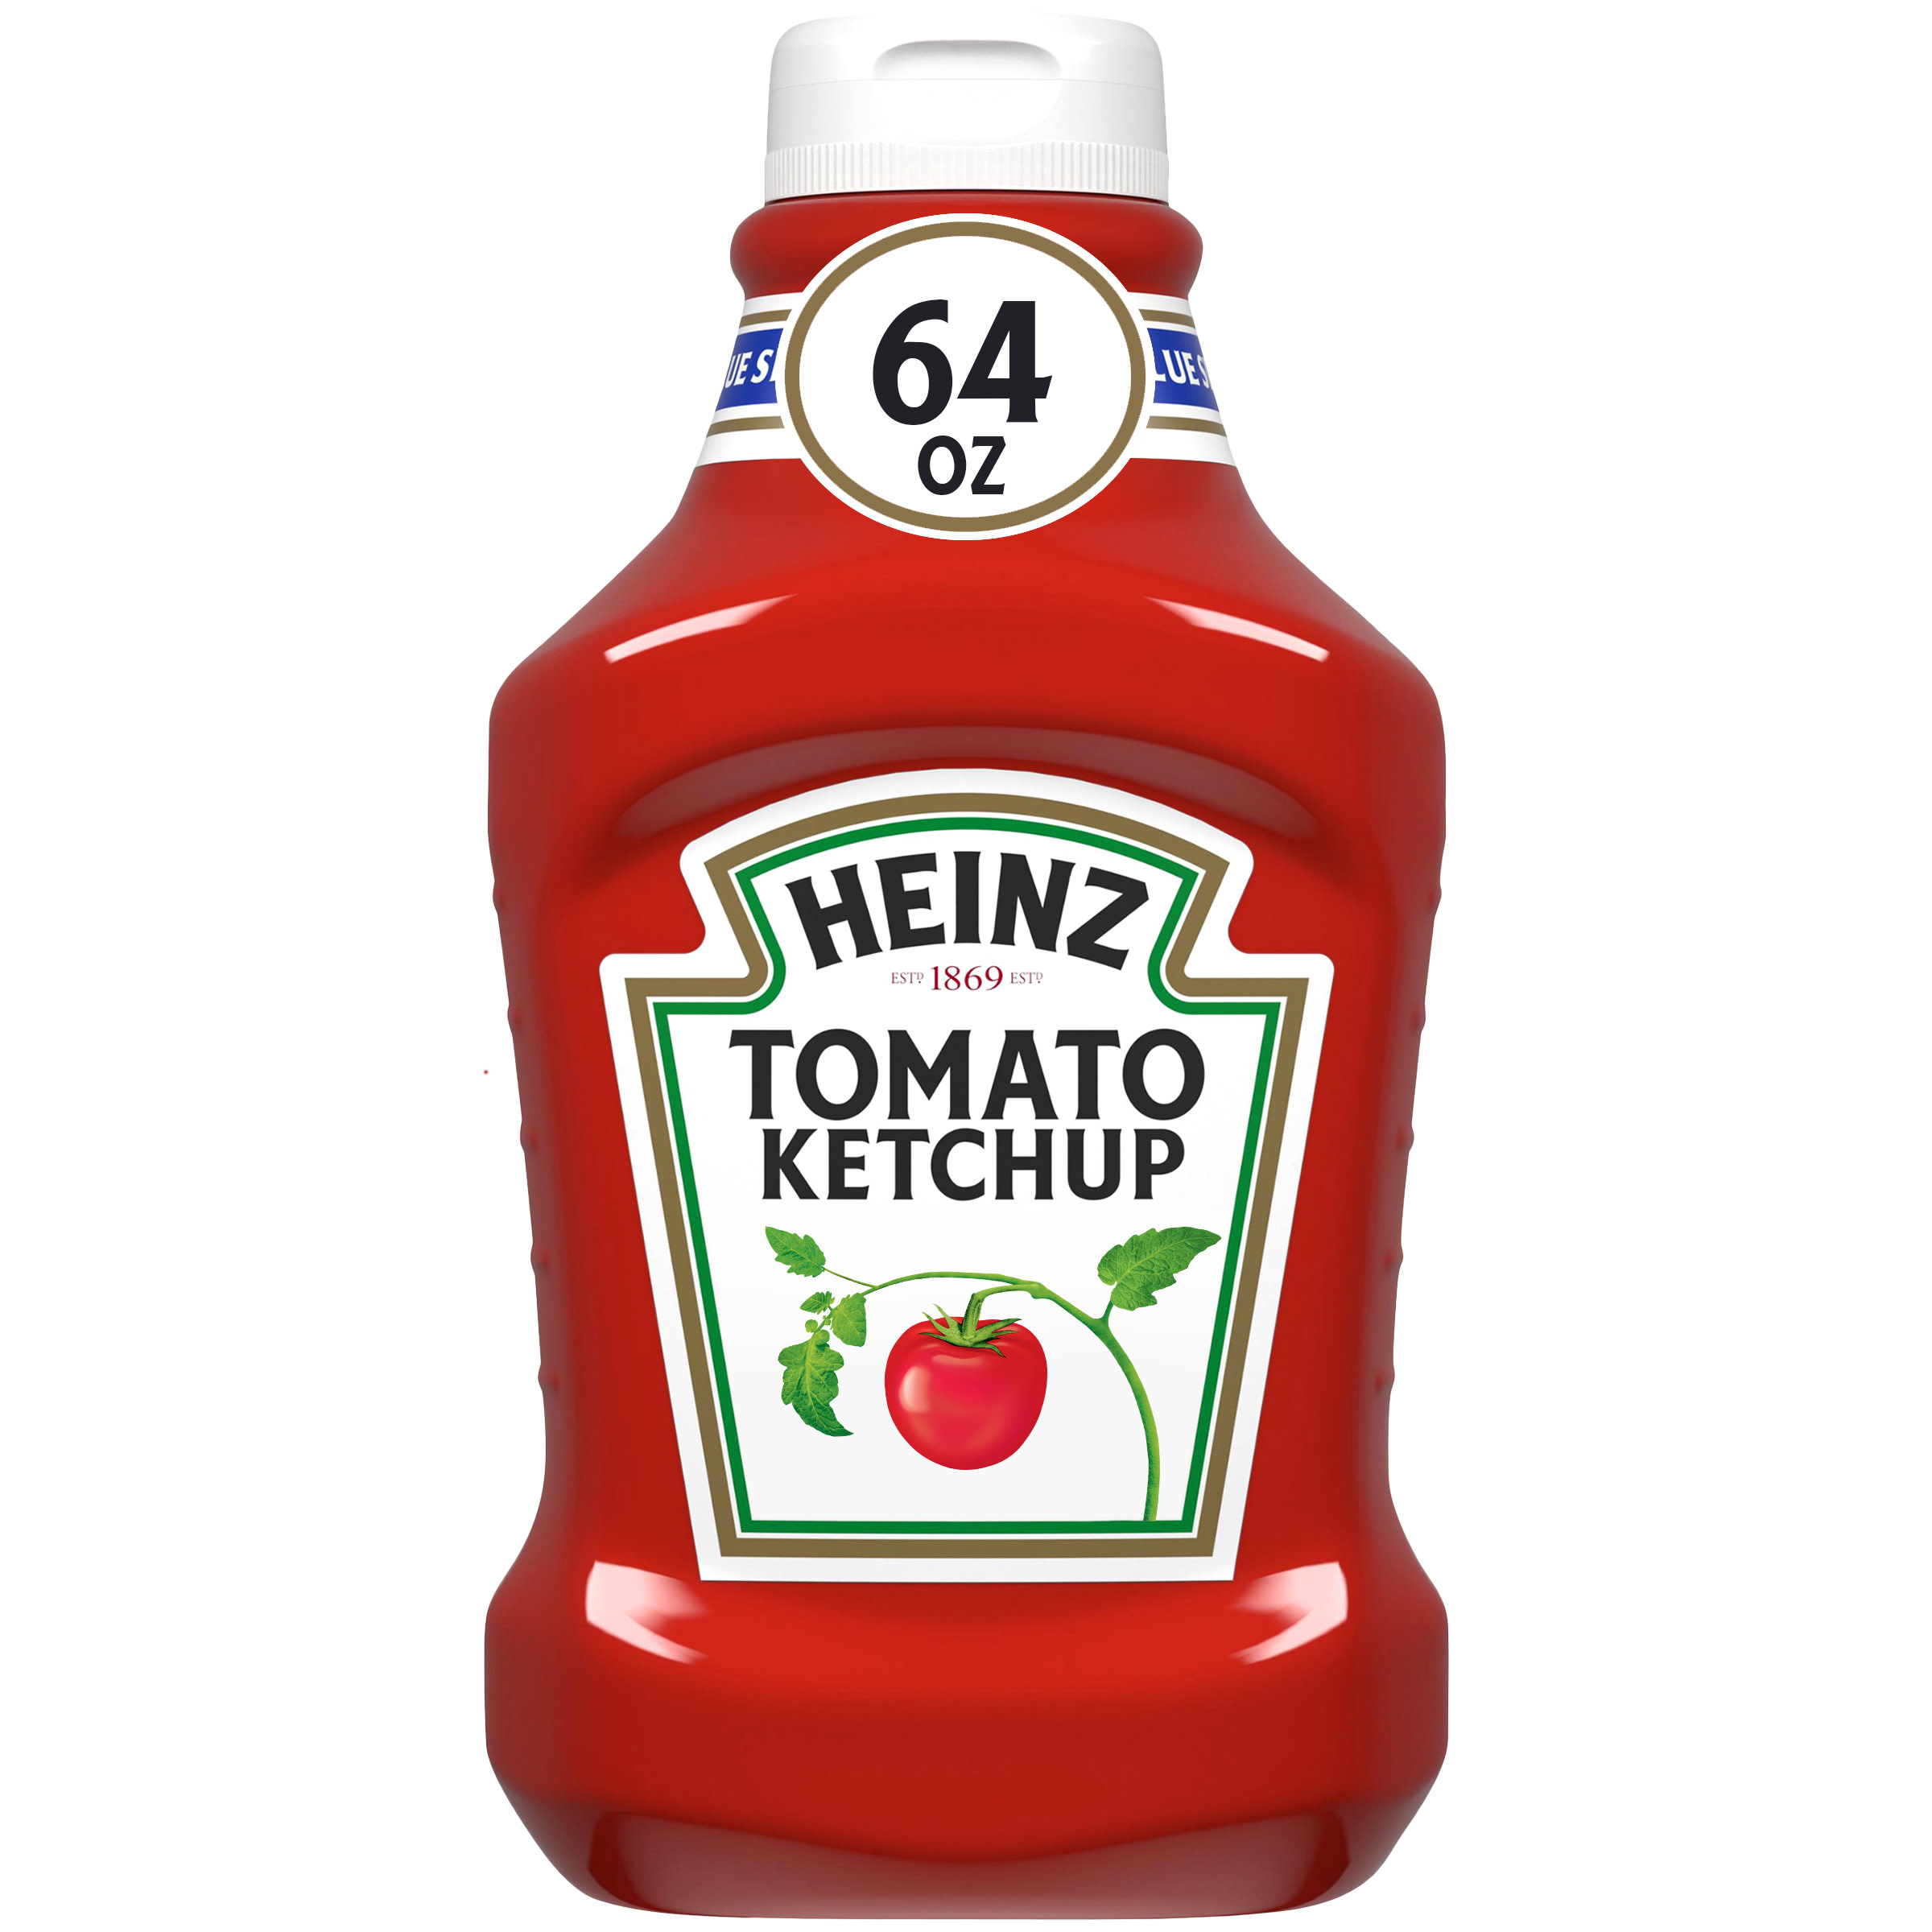 Кетчуп на английском. Heinz Tomato Ketchup. Кетчуп Heinz томатный. "Ketchup ""Heinz"" Tomato 570g  ". Кетчуп томатный Хайнц 0,3.